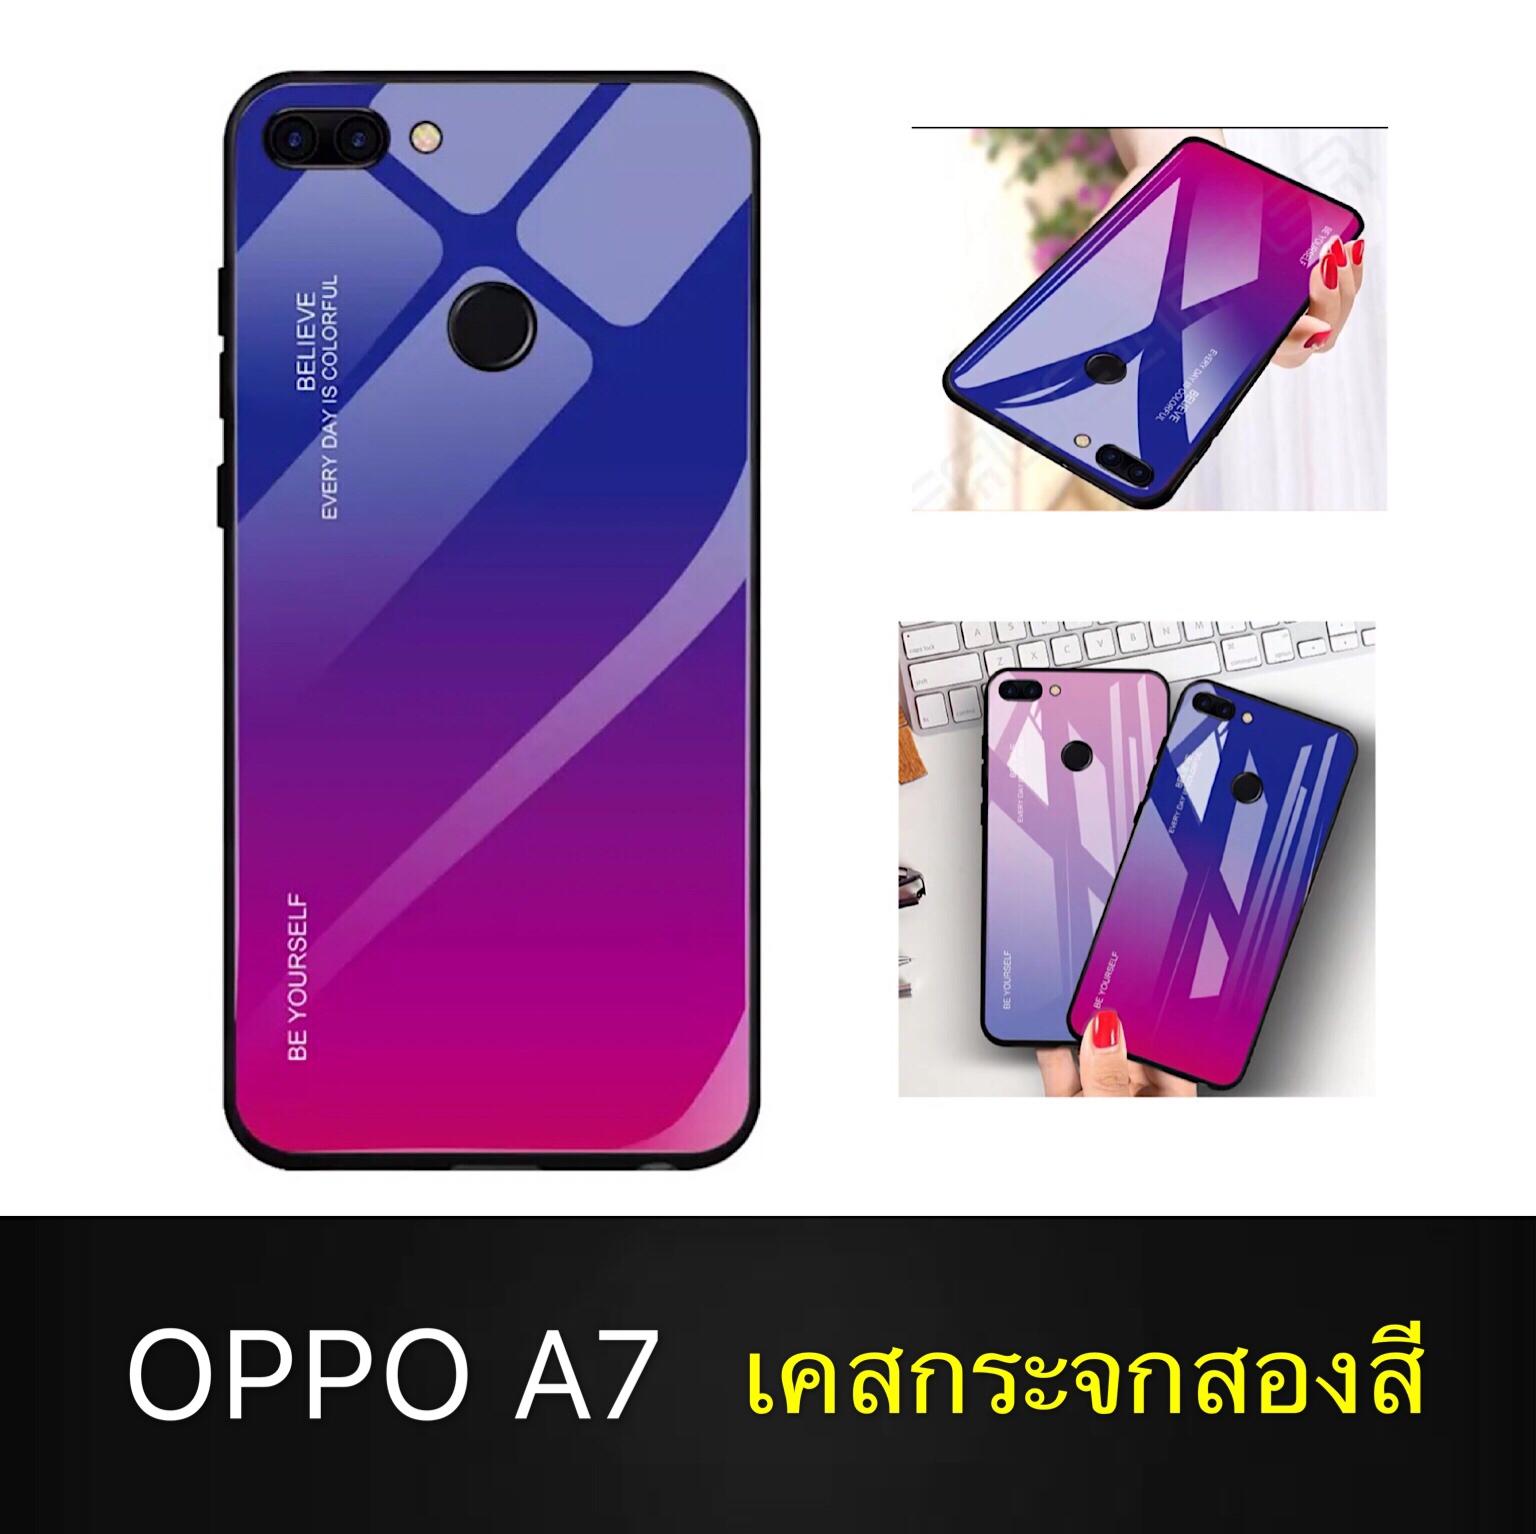 Fashion Case OPPO A7 เคสออฟโป้  สำหรับ Oppo A7 เพลิดเพลินไปกับ 9 PLUS Gradient สีกระจกเทมเปอร์ปลอกแก้วฝาหลังกันชน TPU CASE สินค้าใหม่ OPPO A7 Case